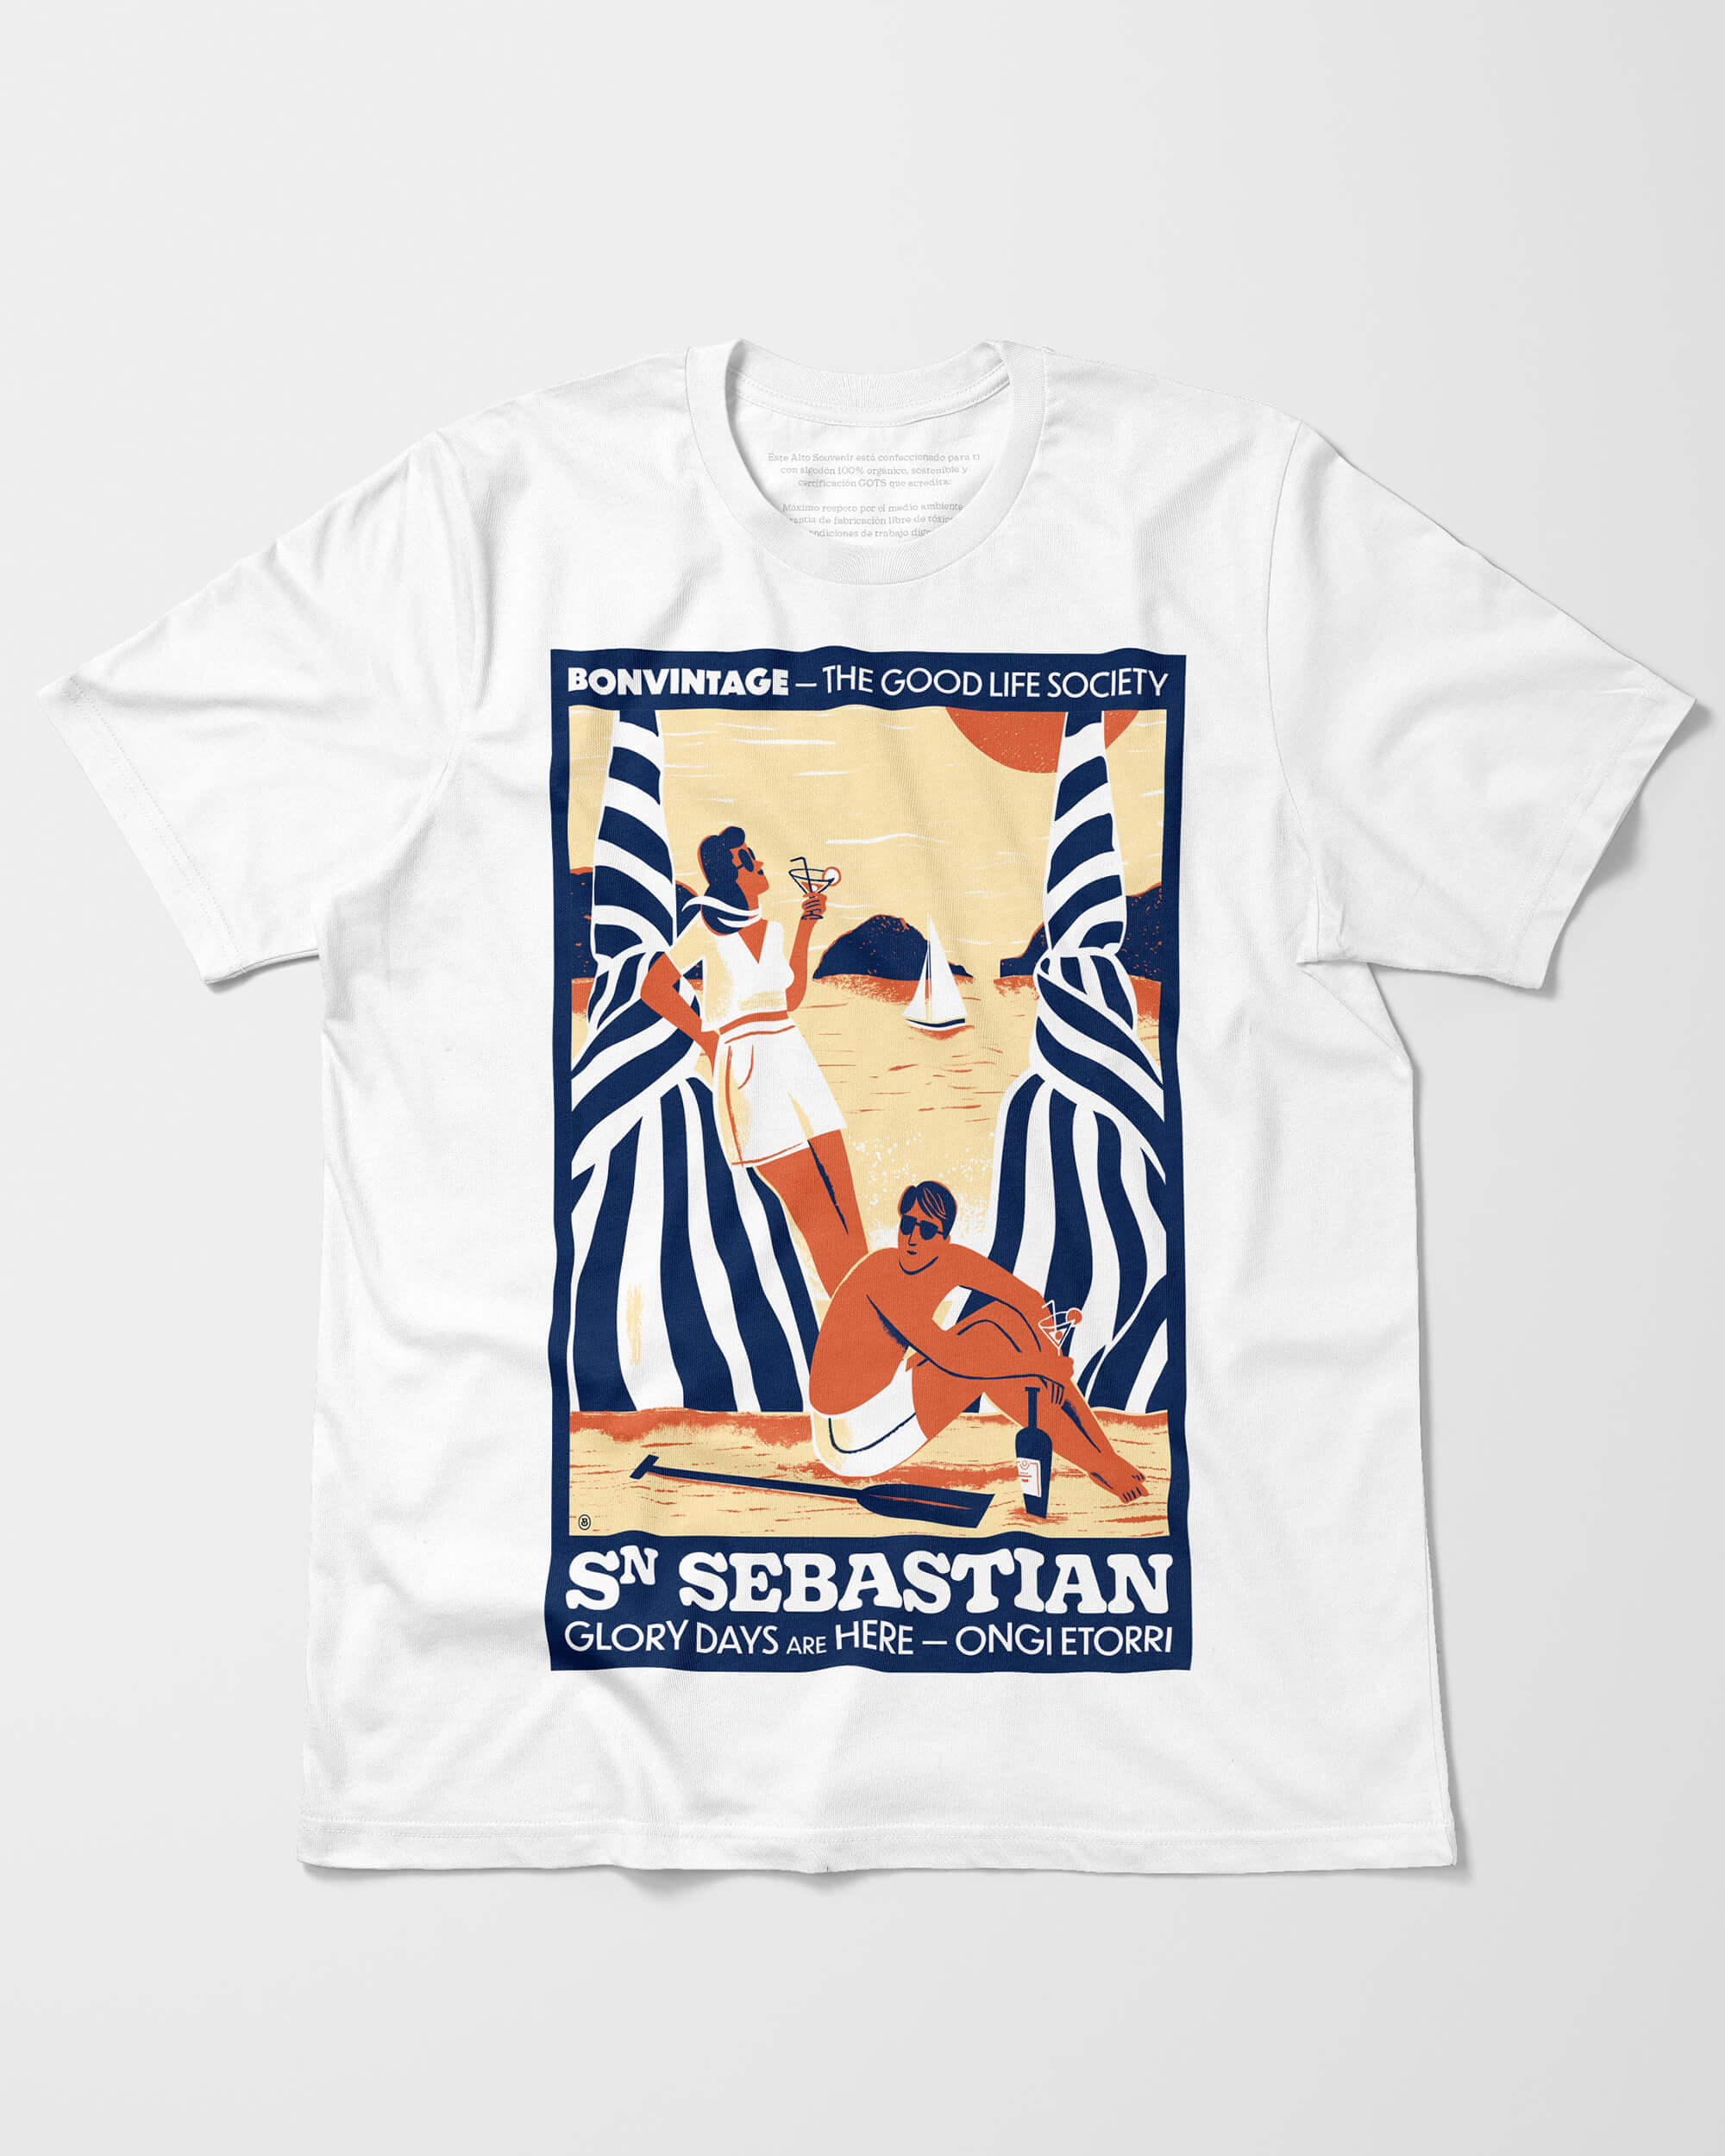 Camiseta San Sebastián Blanca BonVintage